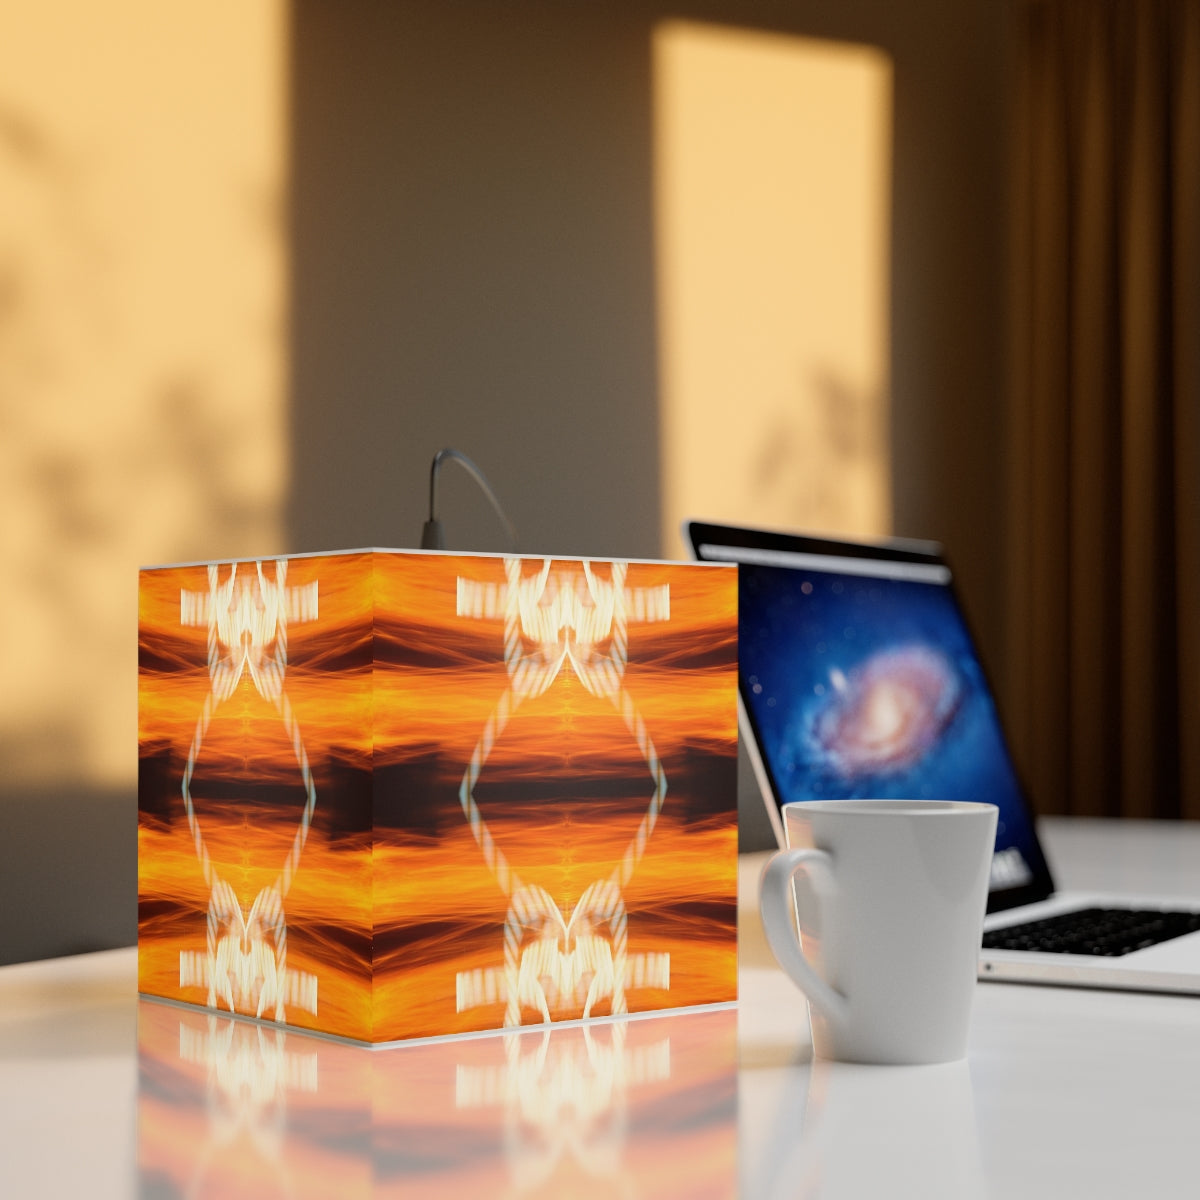 Light Cube Lamp Fire Bow Orange shons lightpainting design seandiamond